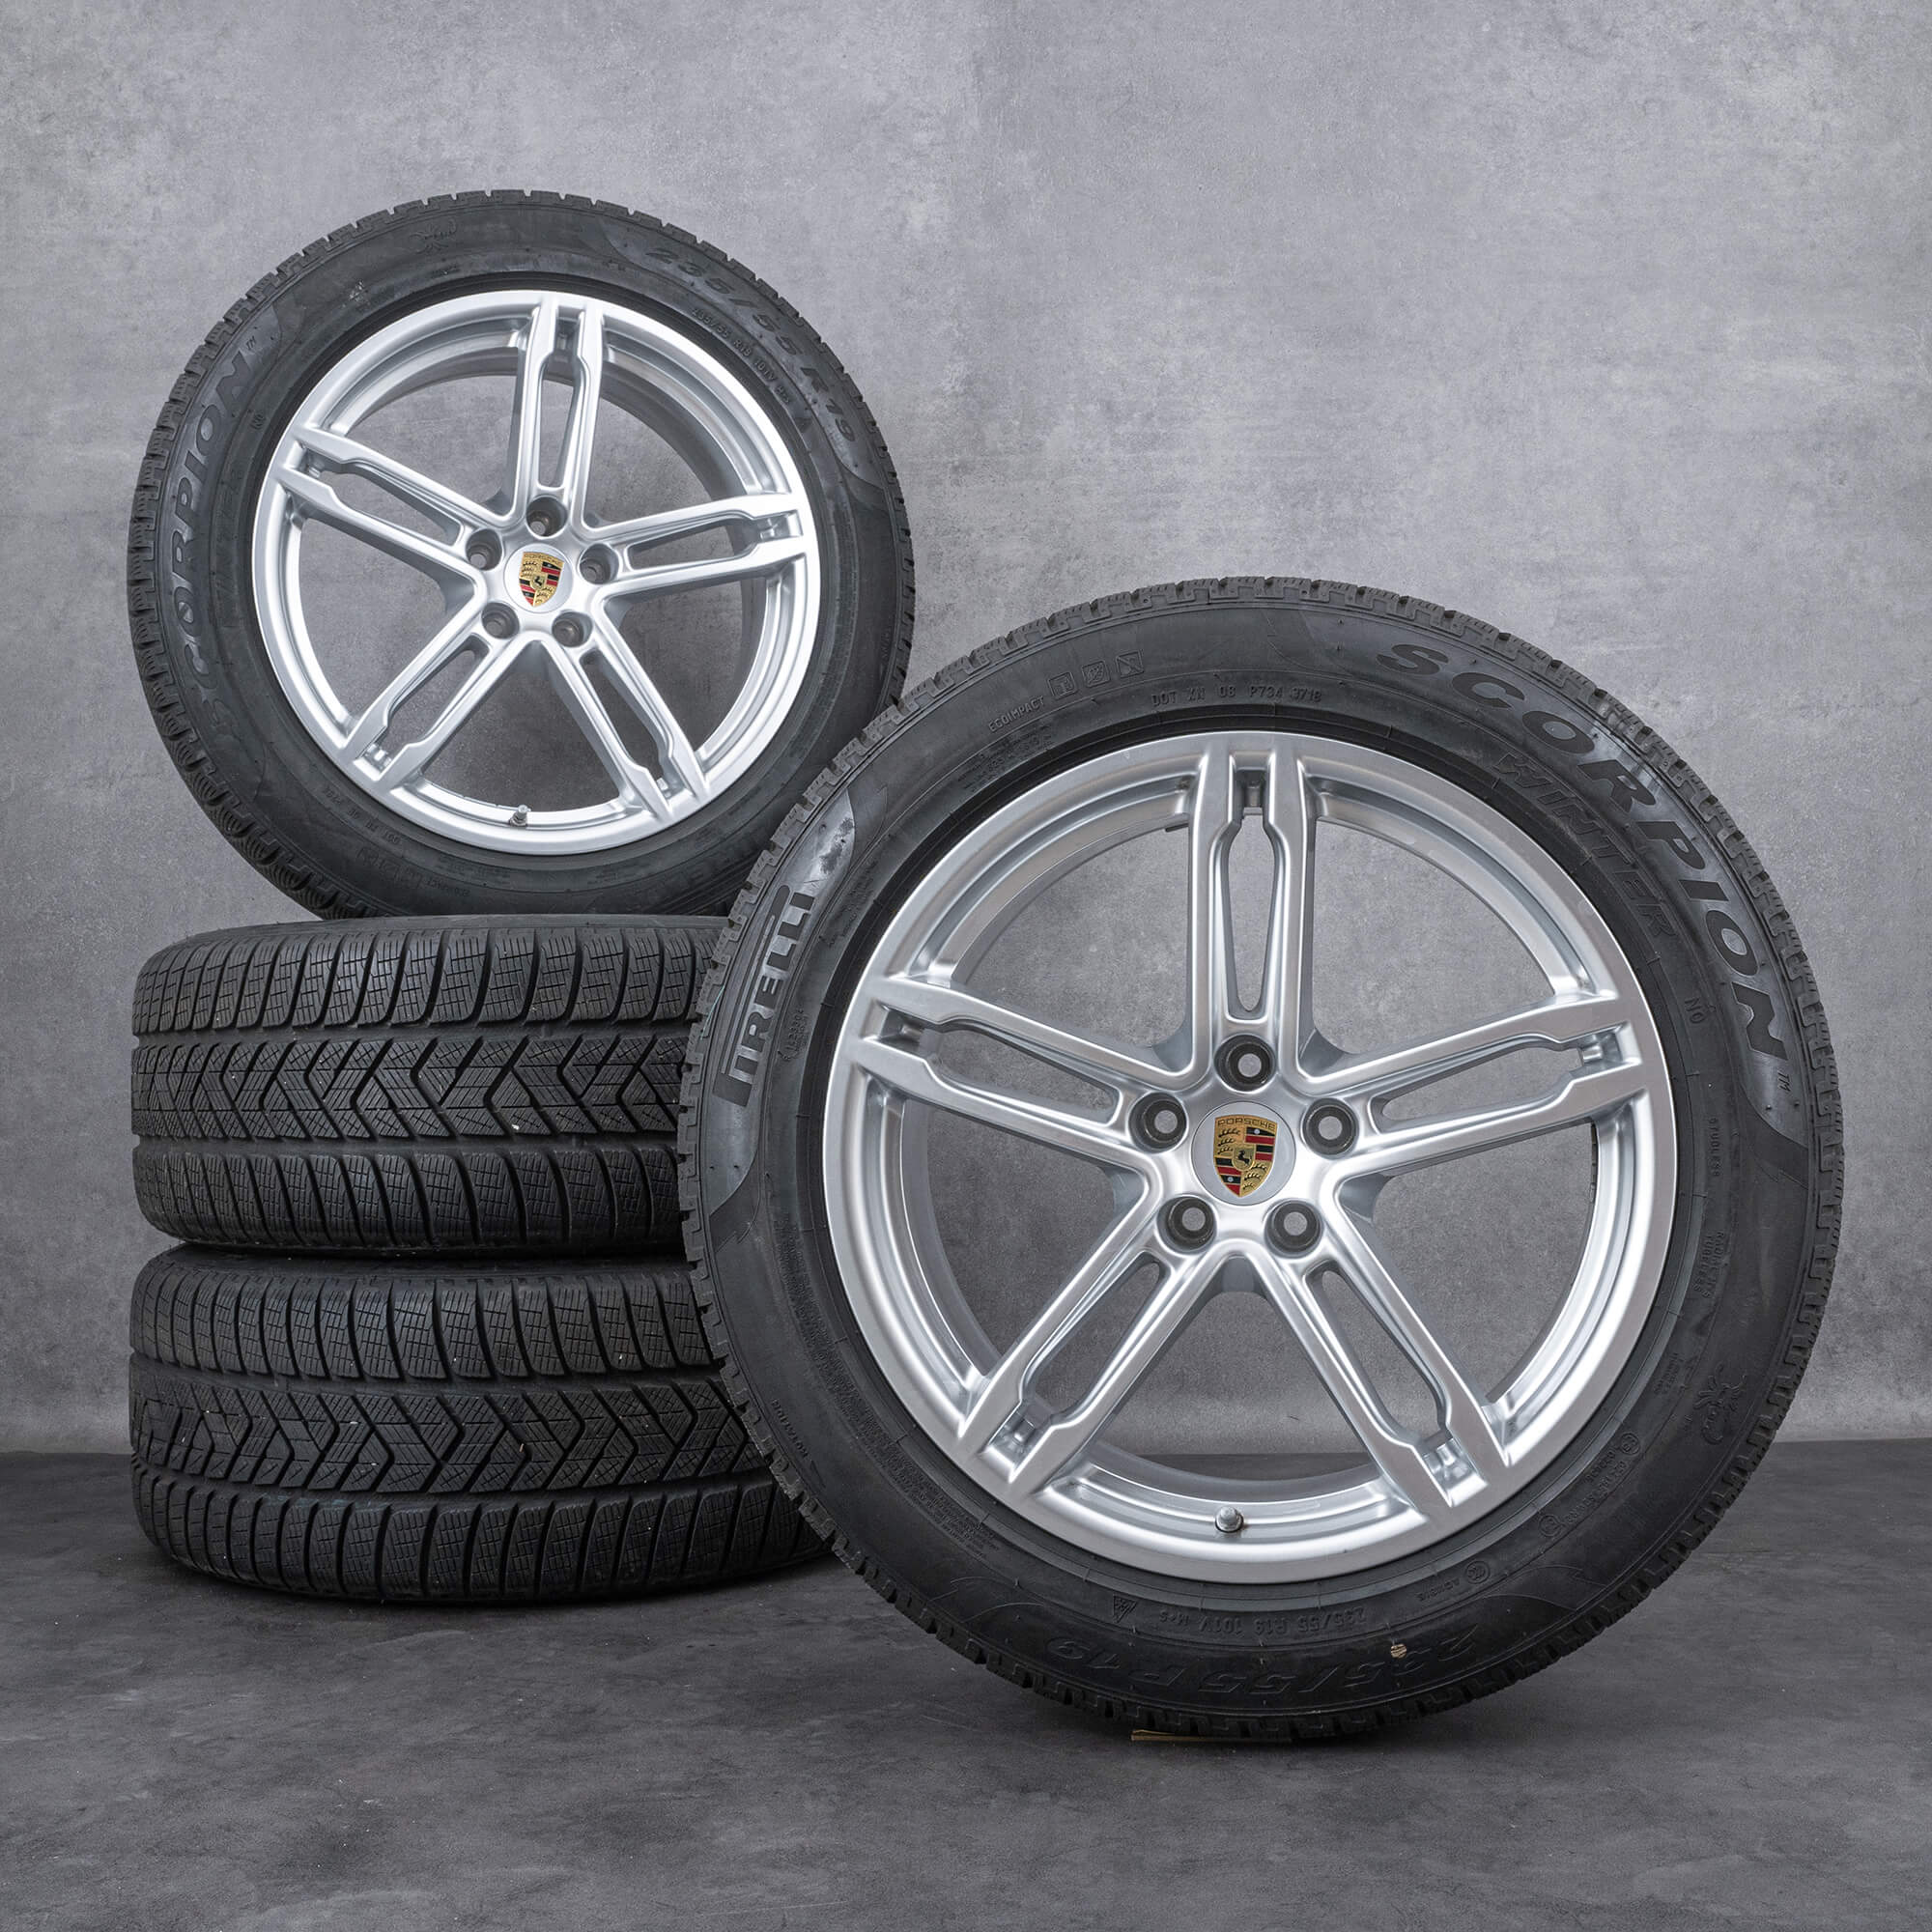 95B Pirelli inch tires Macan 19 rims winter Porsche Original wheels winter